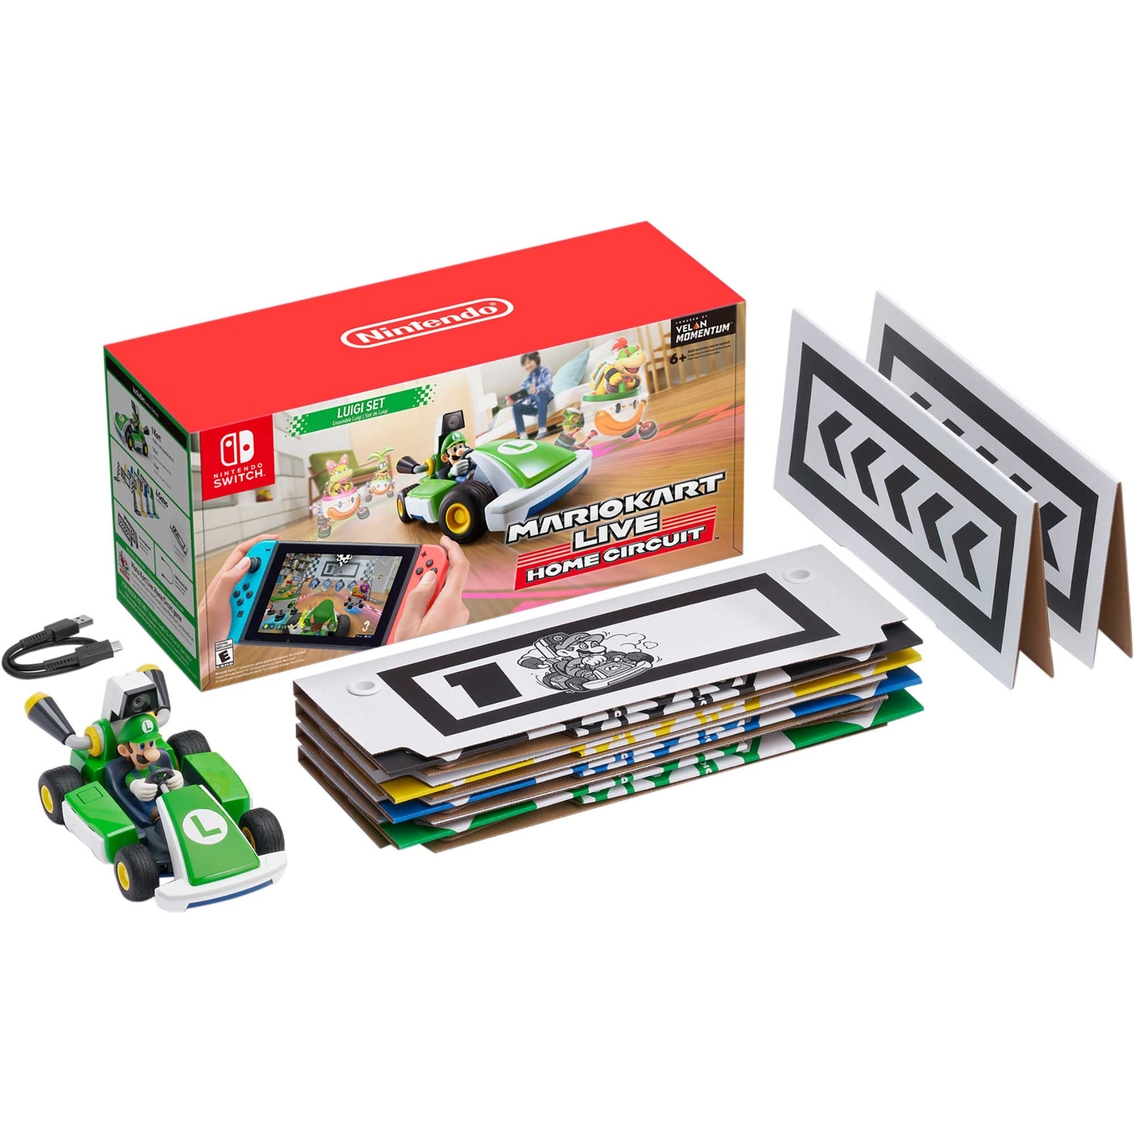 Mario Kart Live: Home Circuit Luigi Set (Nintendo Switch) - Image 2 of 2